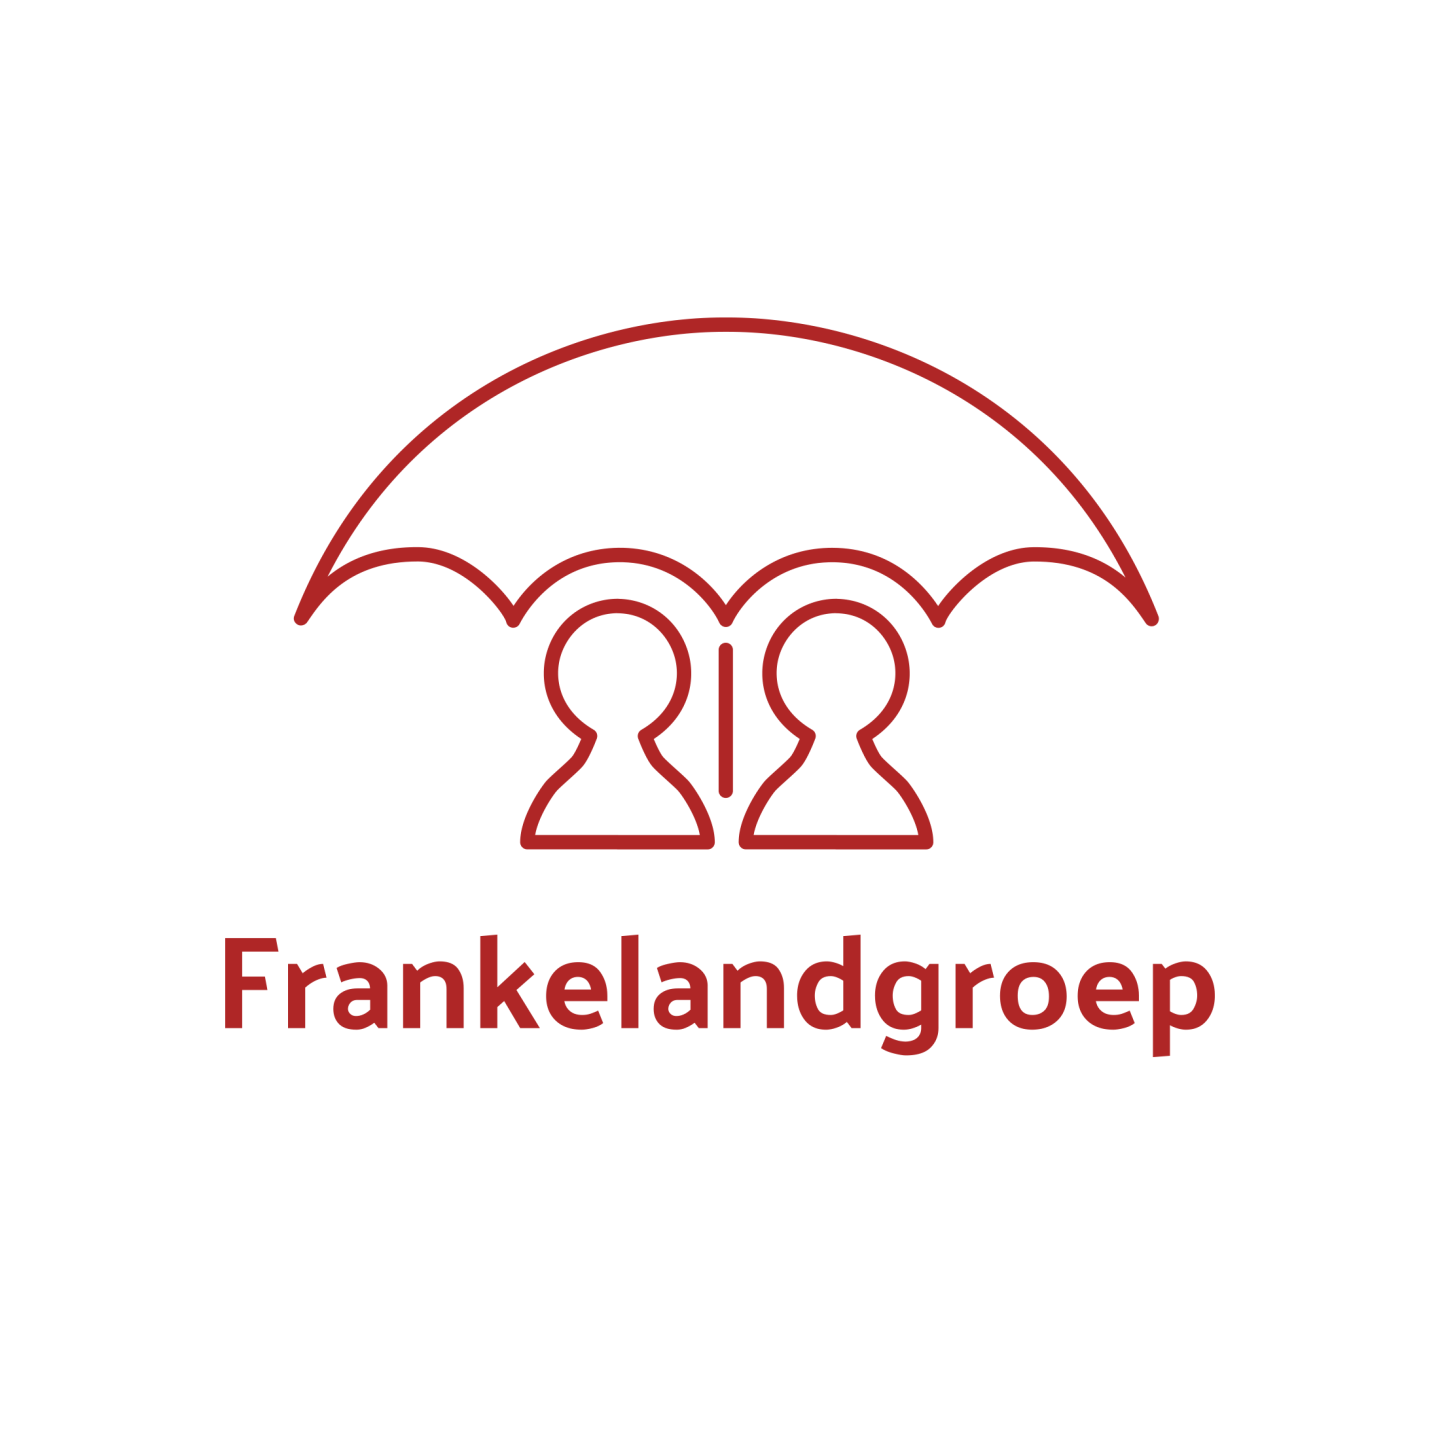 Frankelandgroep logo